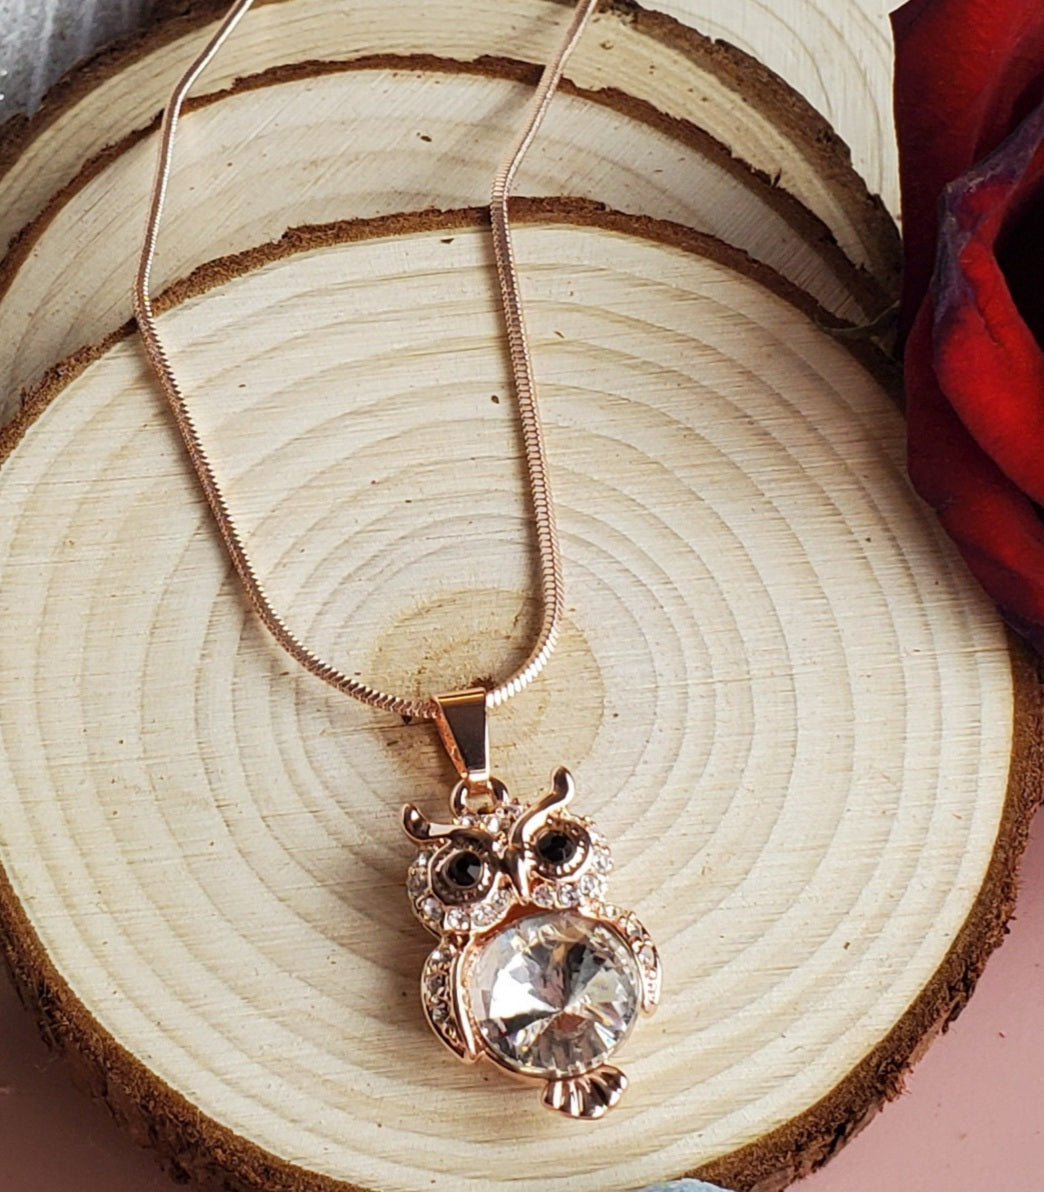 Owl Pendant Necklace